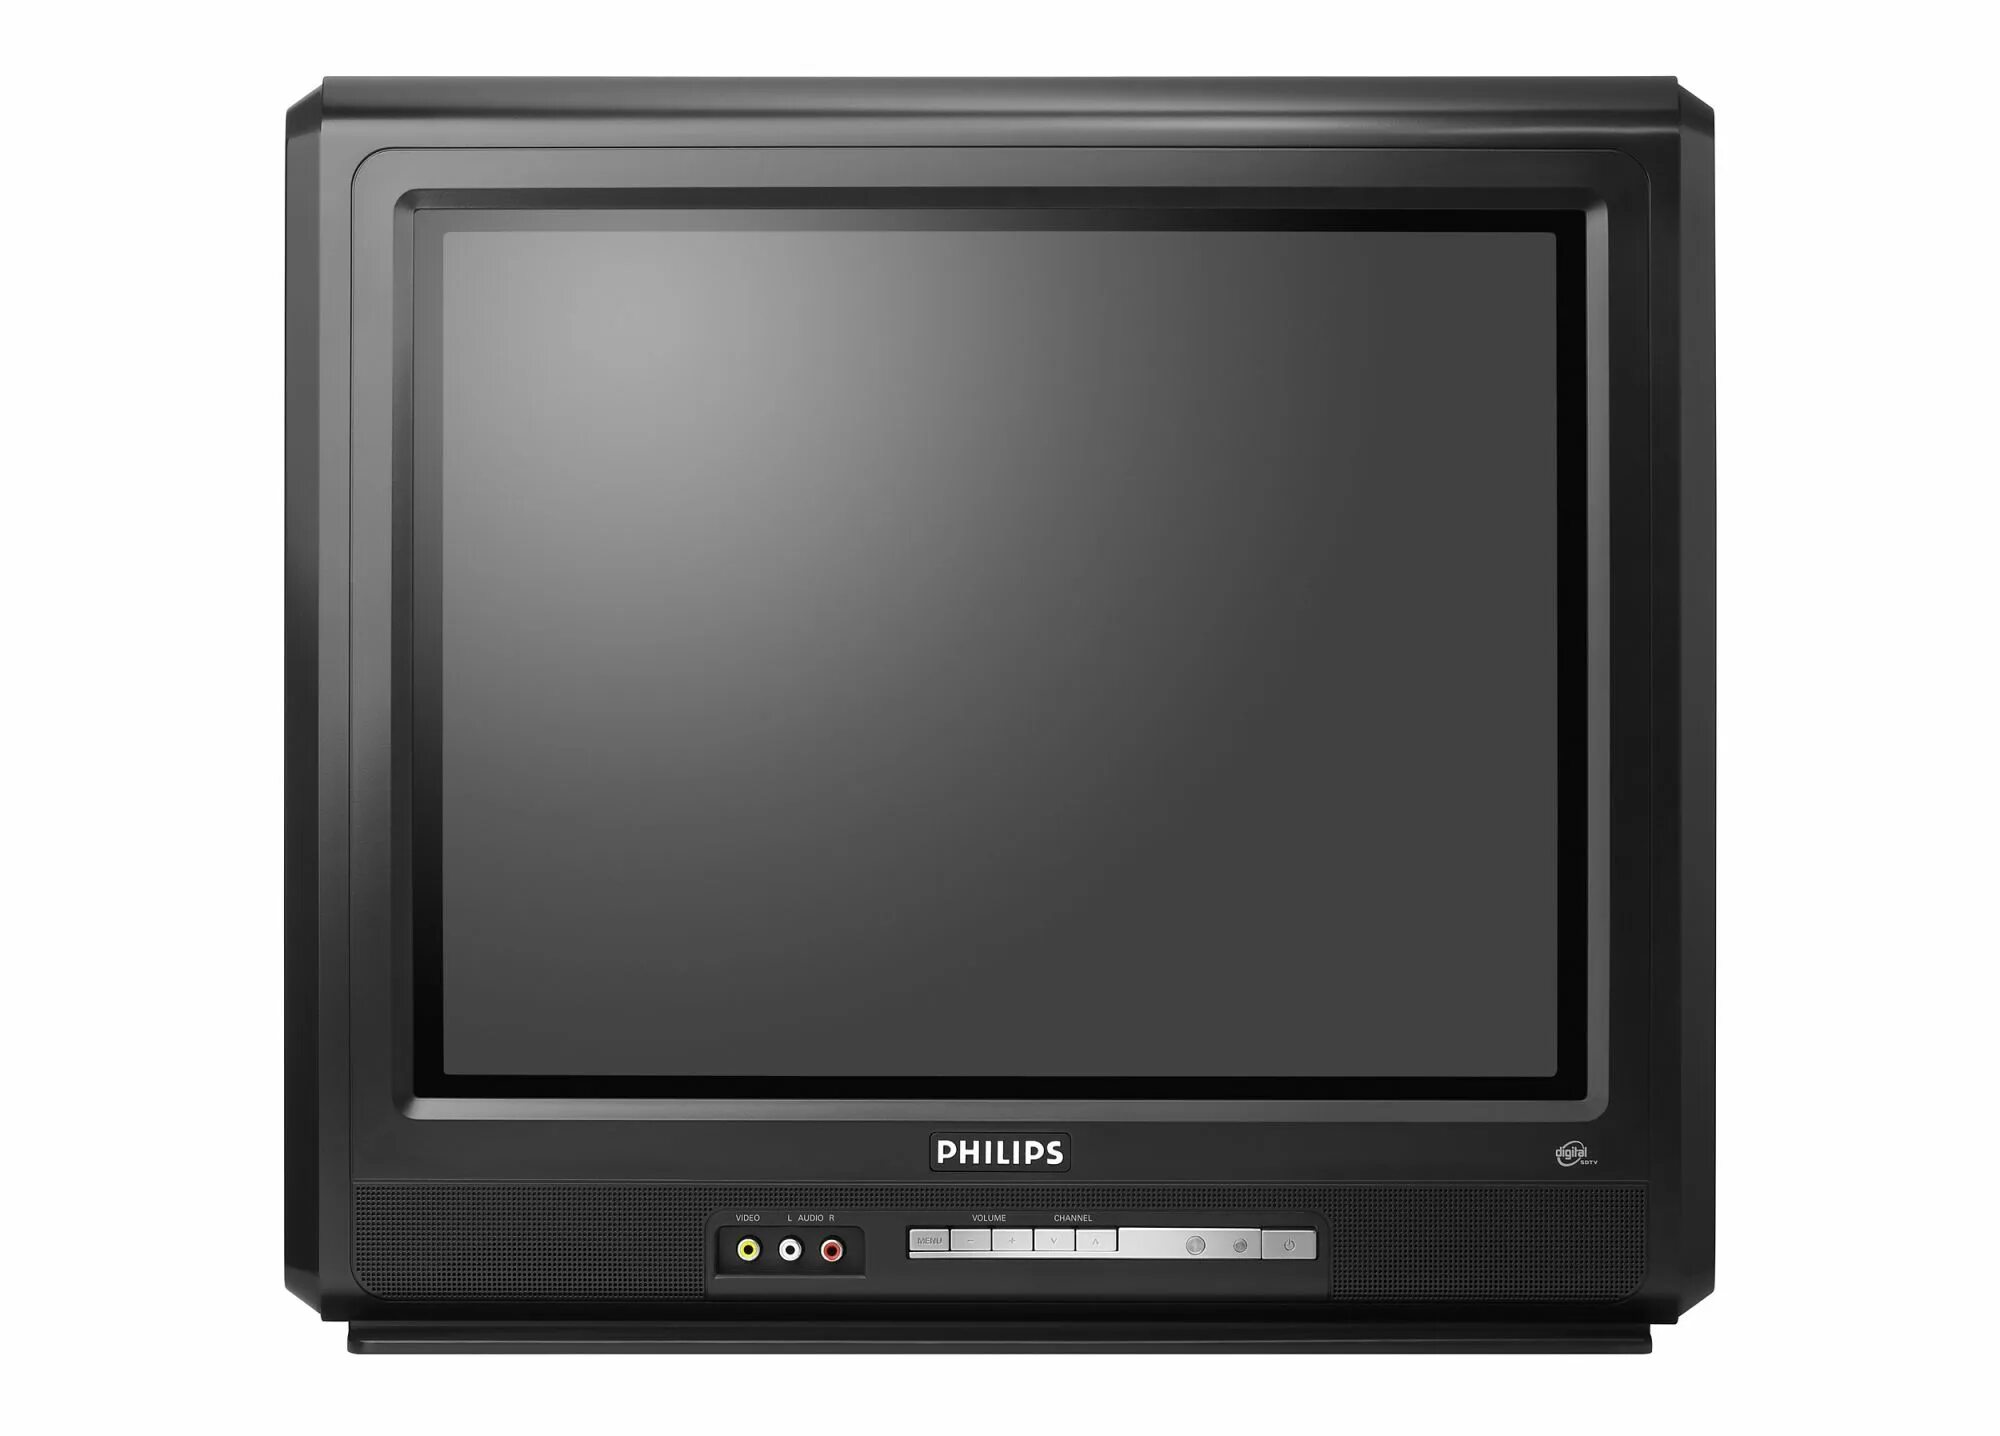 Телевизор Sony Trinitron ЭЛТ. Philips CRT TV 14 дюймов. LG 14" ЭЛТ телевизор чёрный. Телевизор Филипс 20 дюймов. Телевизор 20 минут